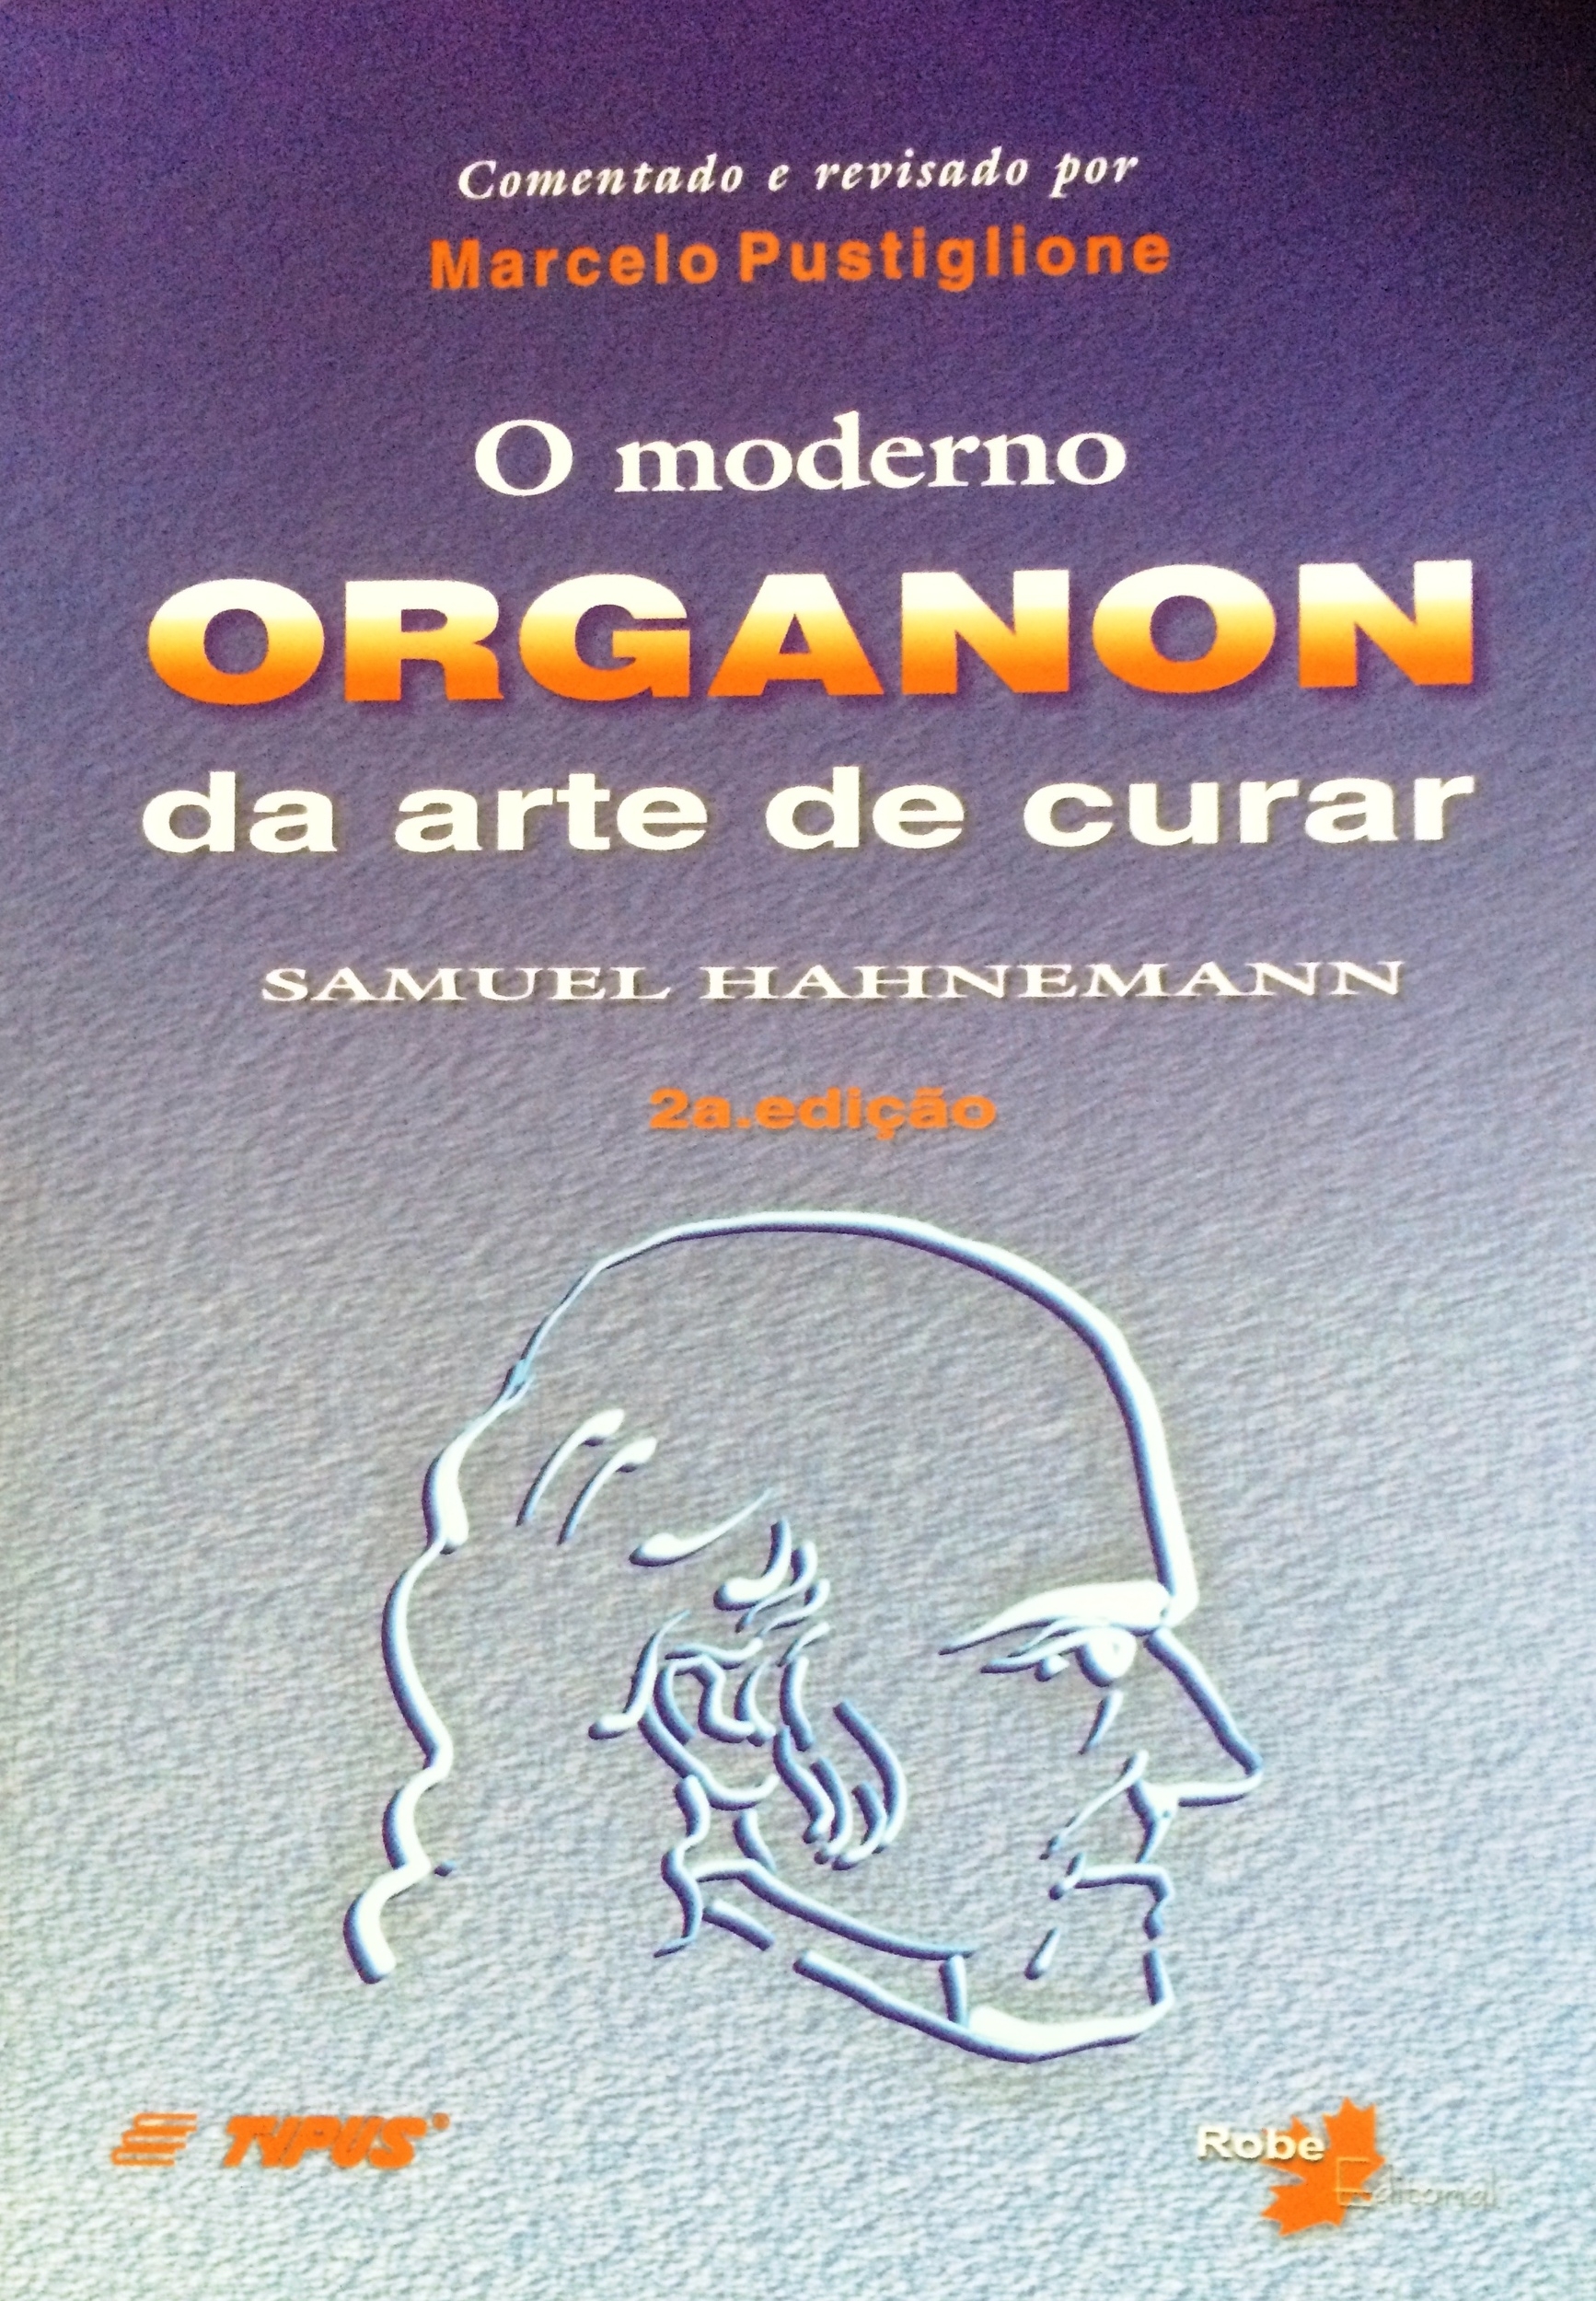 Organon moderno 2 ed.jpg